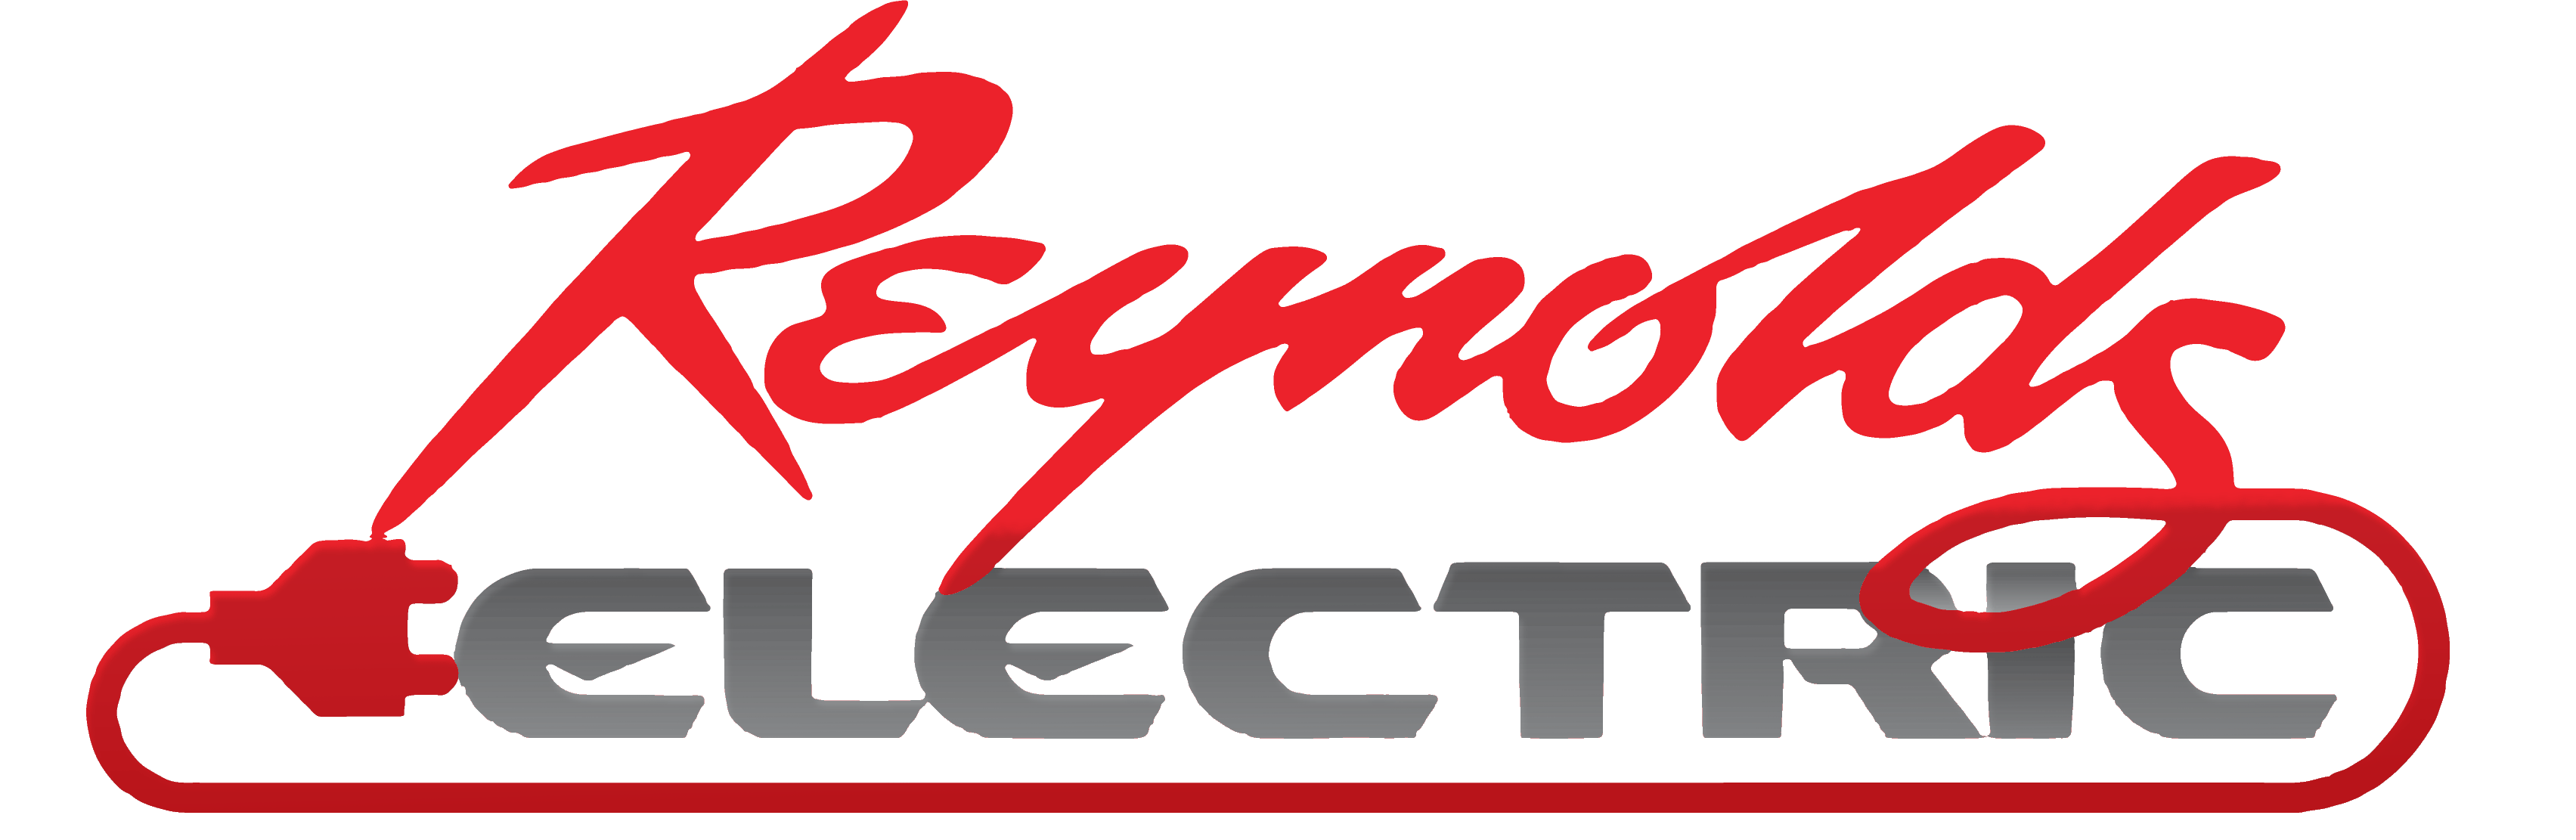 Reynolds Electric Inc.